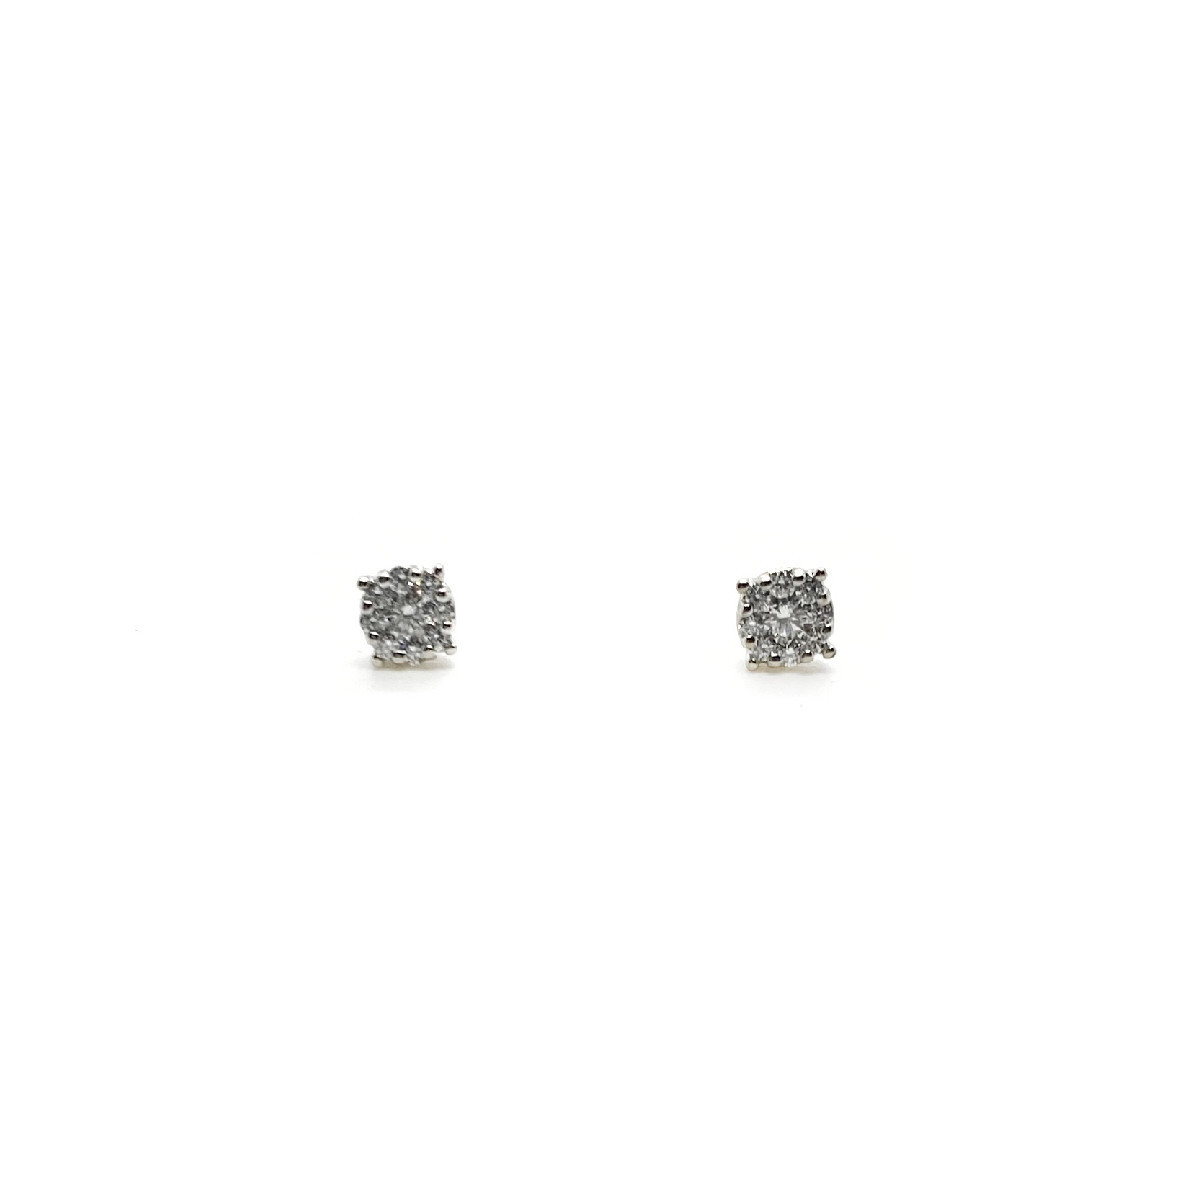 SUPERORO WHITE GOLD DIAMONDS EARRINGS - A50-S10O:01